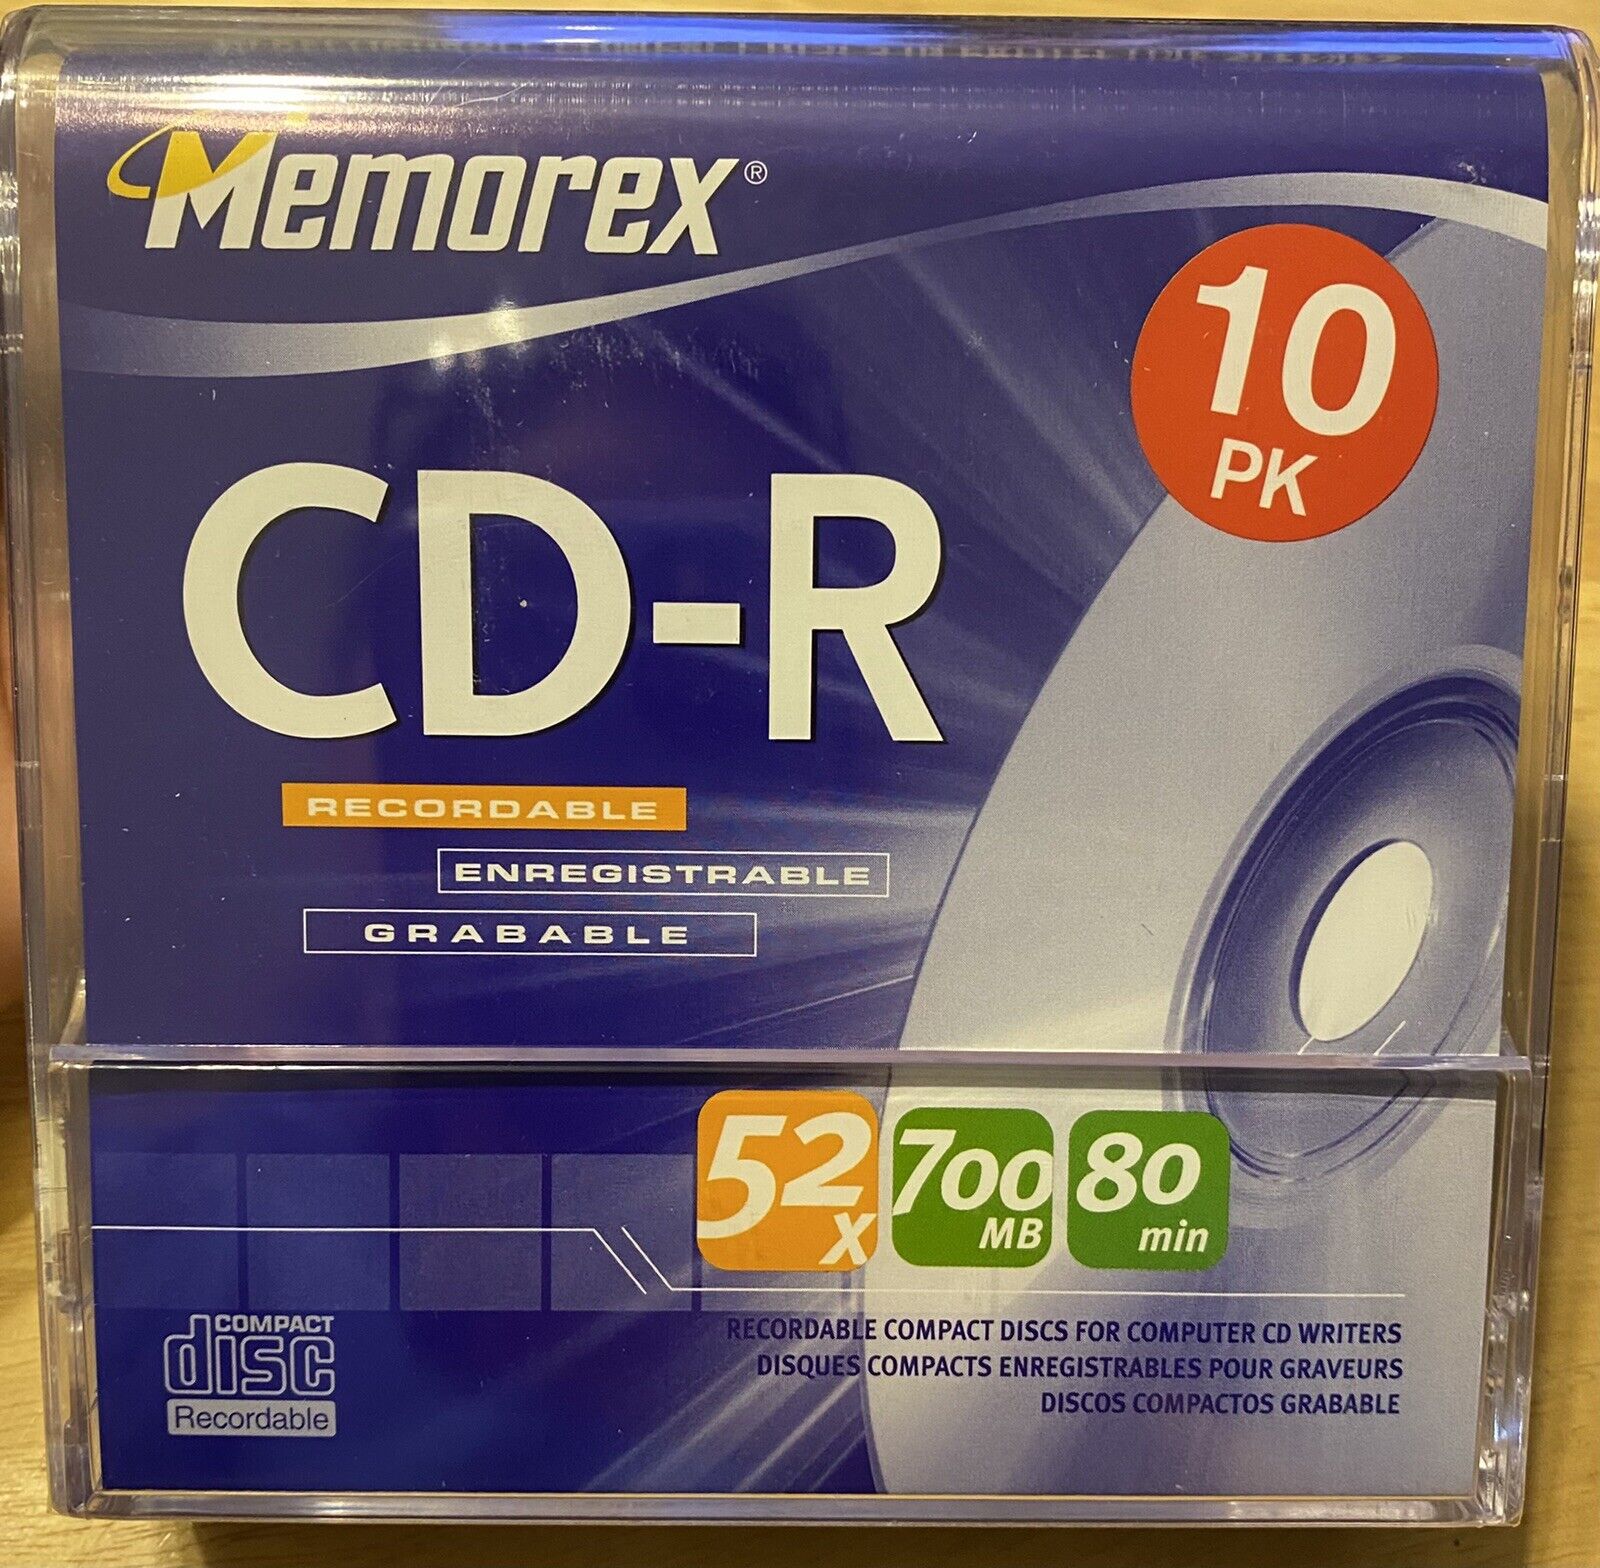 NEW Memorex 034707045477 CD-R 52x 700MB 80 Min Discs in Paper Sl